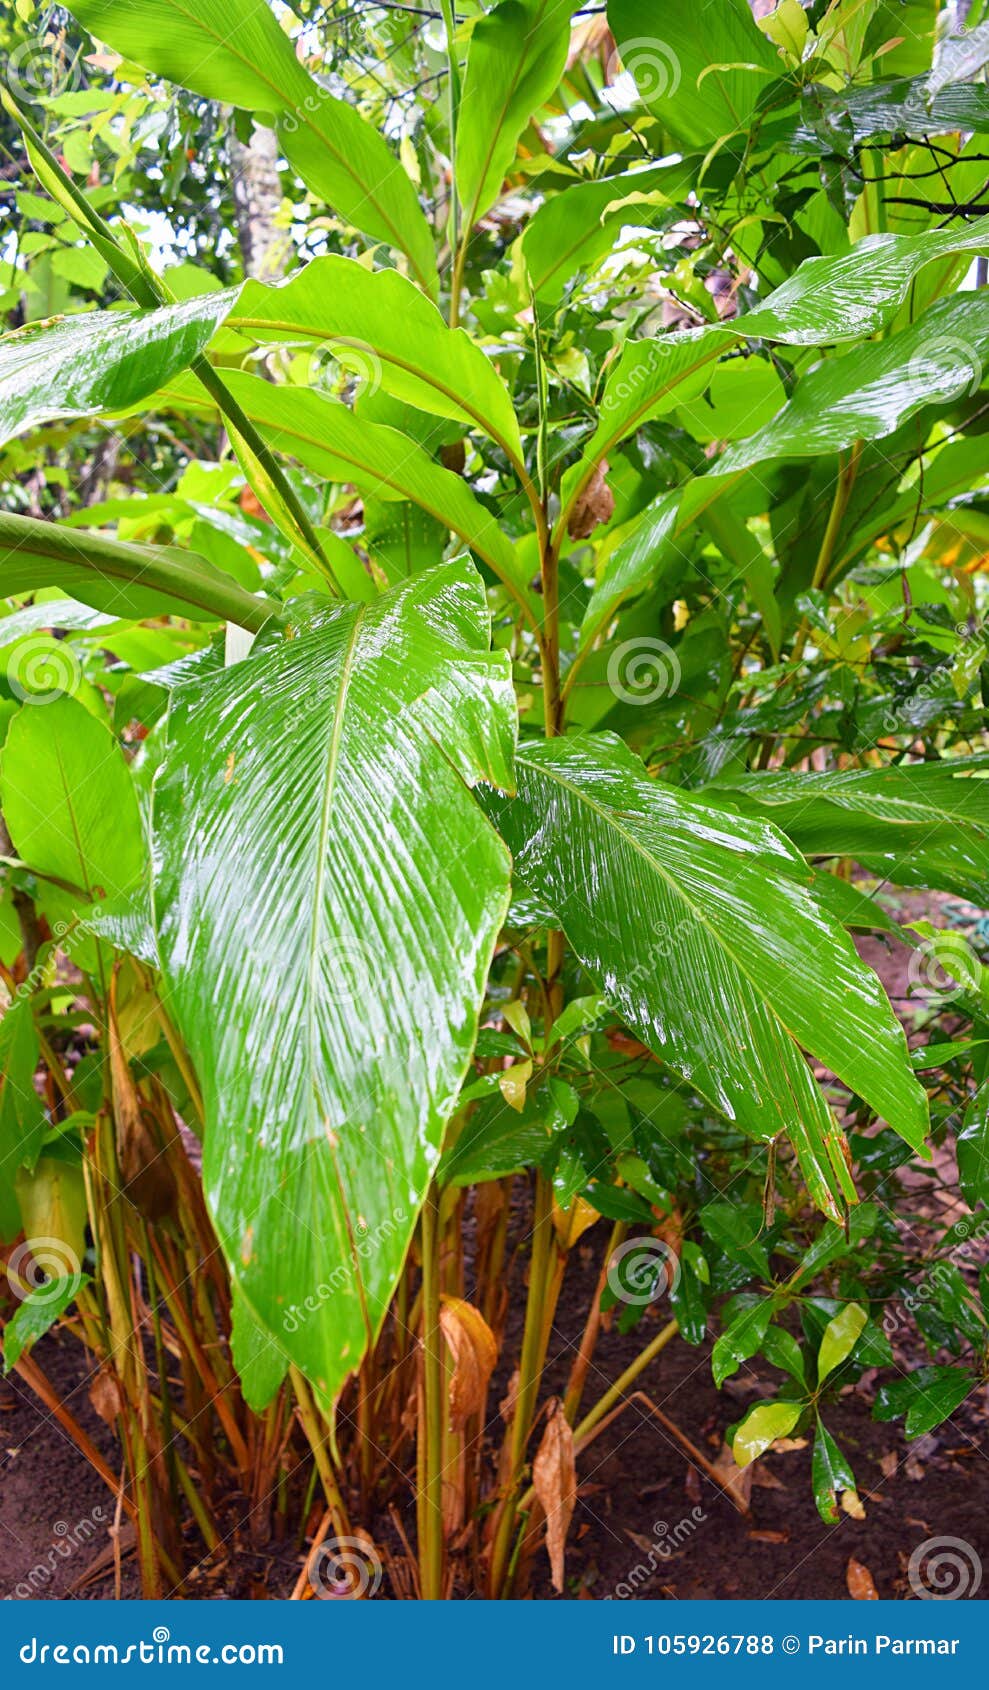 Leaves And Plant Of Cardamom Elettaria Cardamomum Maton Malabar Elaichi Spice Plantation In Kerala India Stock Photo Image Of Estate Ilaychi 105926788,Parmigiano Reggiano Cheese Plate